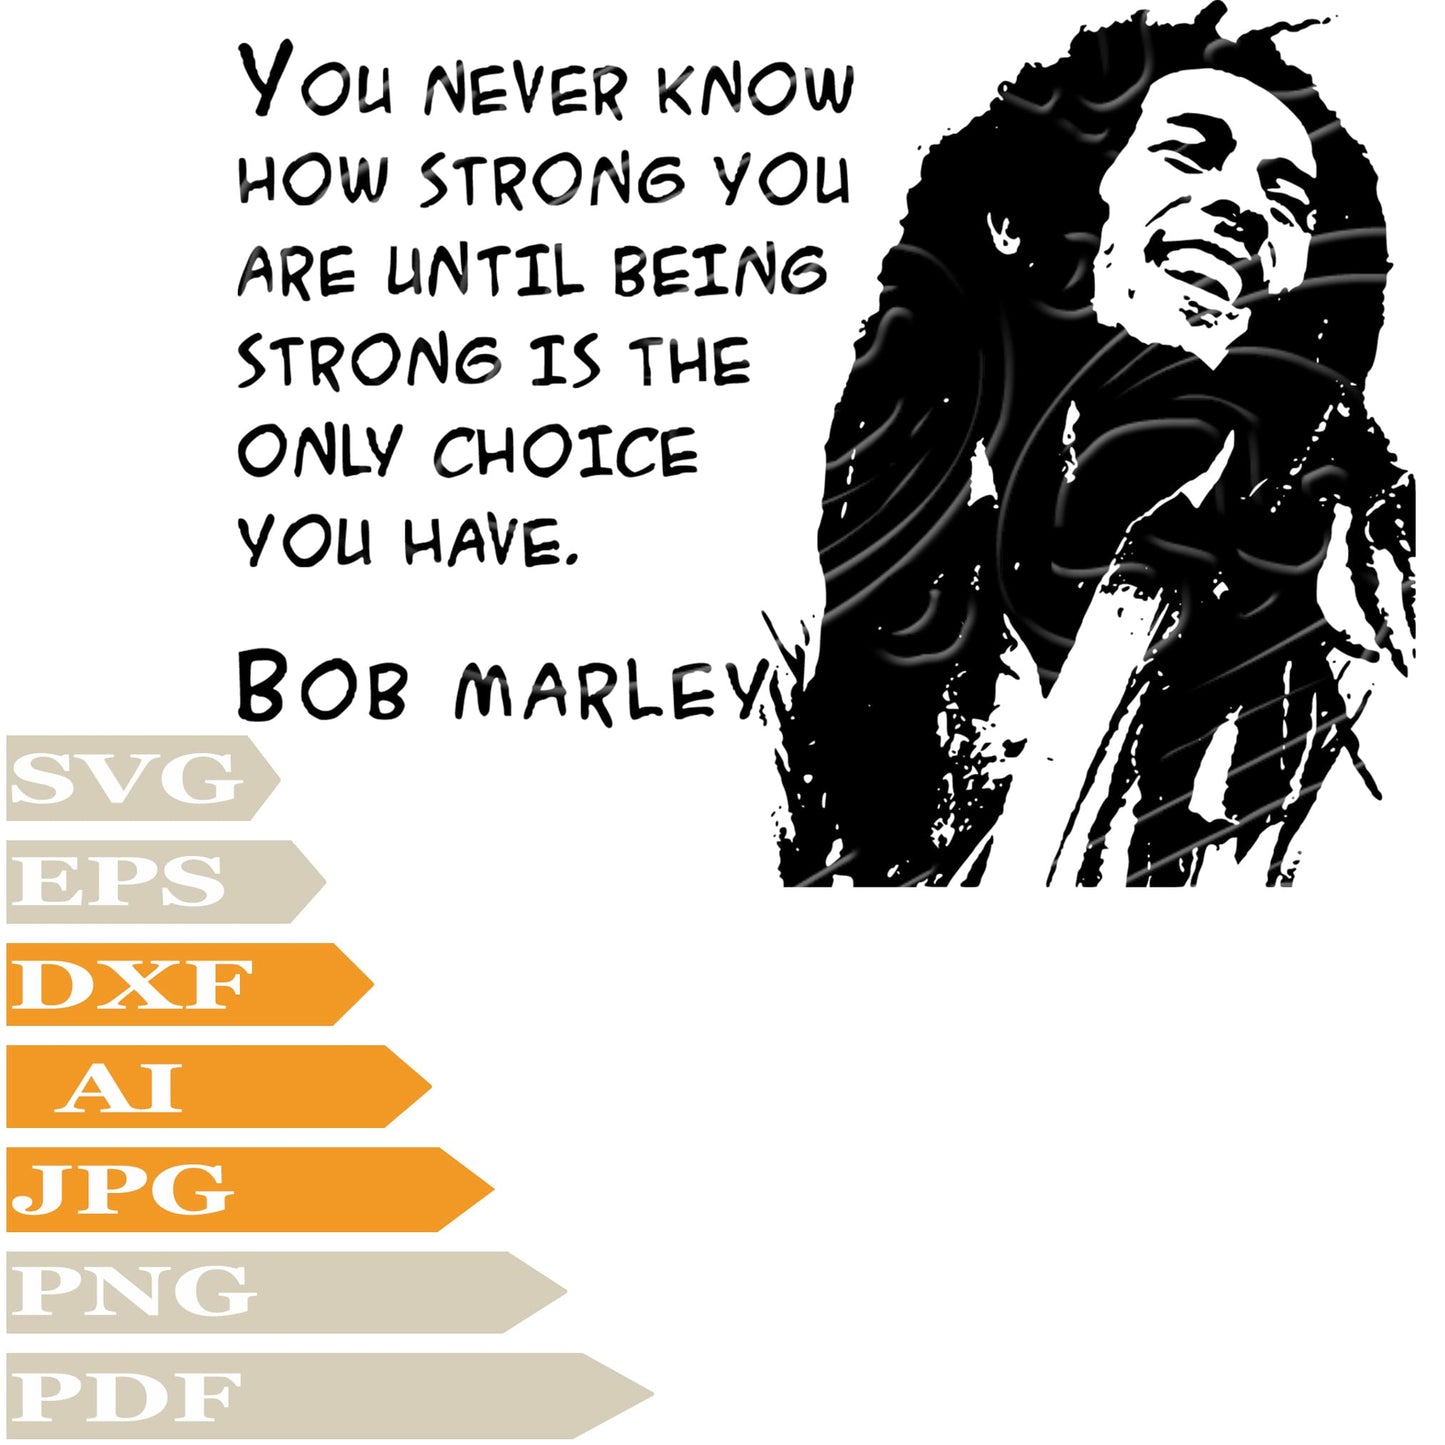 Bob Marley Svg File,Bob Marley Face Svg Design,Reggae Music Genre Clip art,Reggae King Bob marley Cut File,Bob Marley Face Digital Vector,Bob Marley For Tattoo,Bob Marley Wall sticker,Bob Marley Instant Download,Bob Marley For Cricut